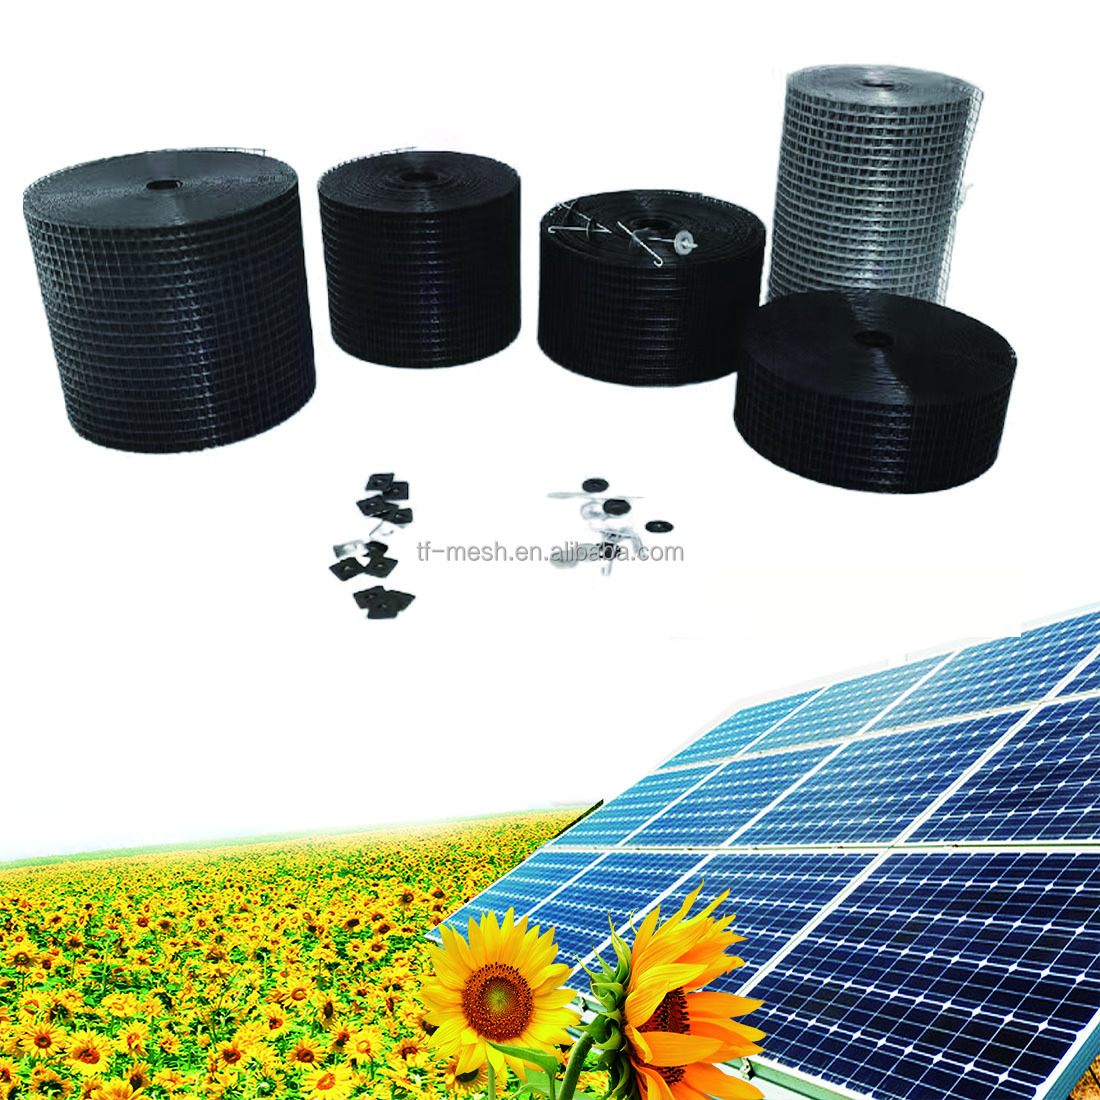 Solar Panel Mesh: Enhancing Efficiency and Protecting Nature.